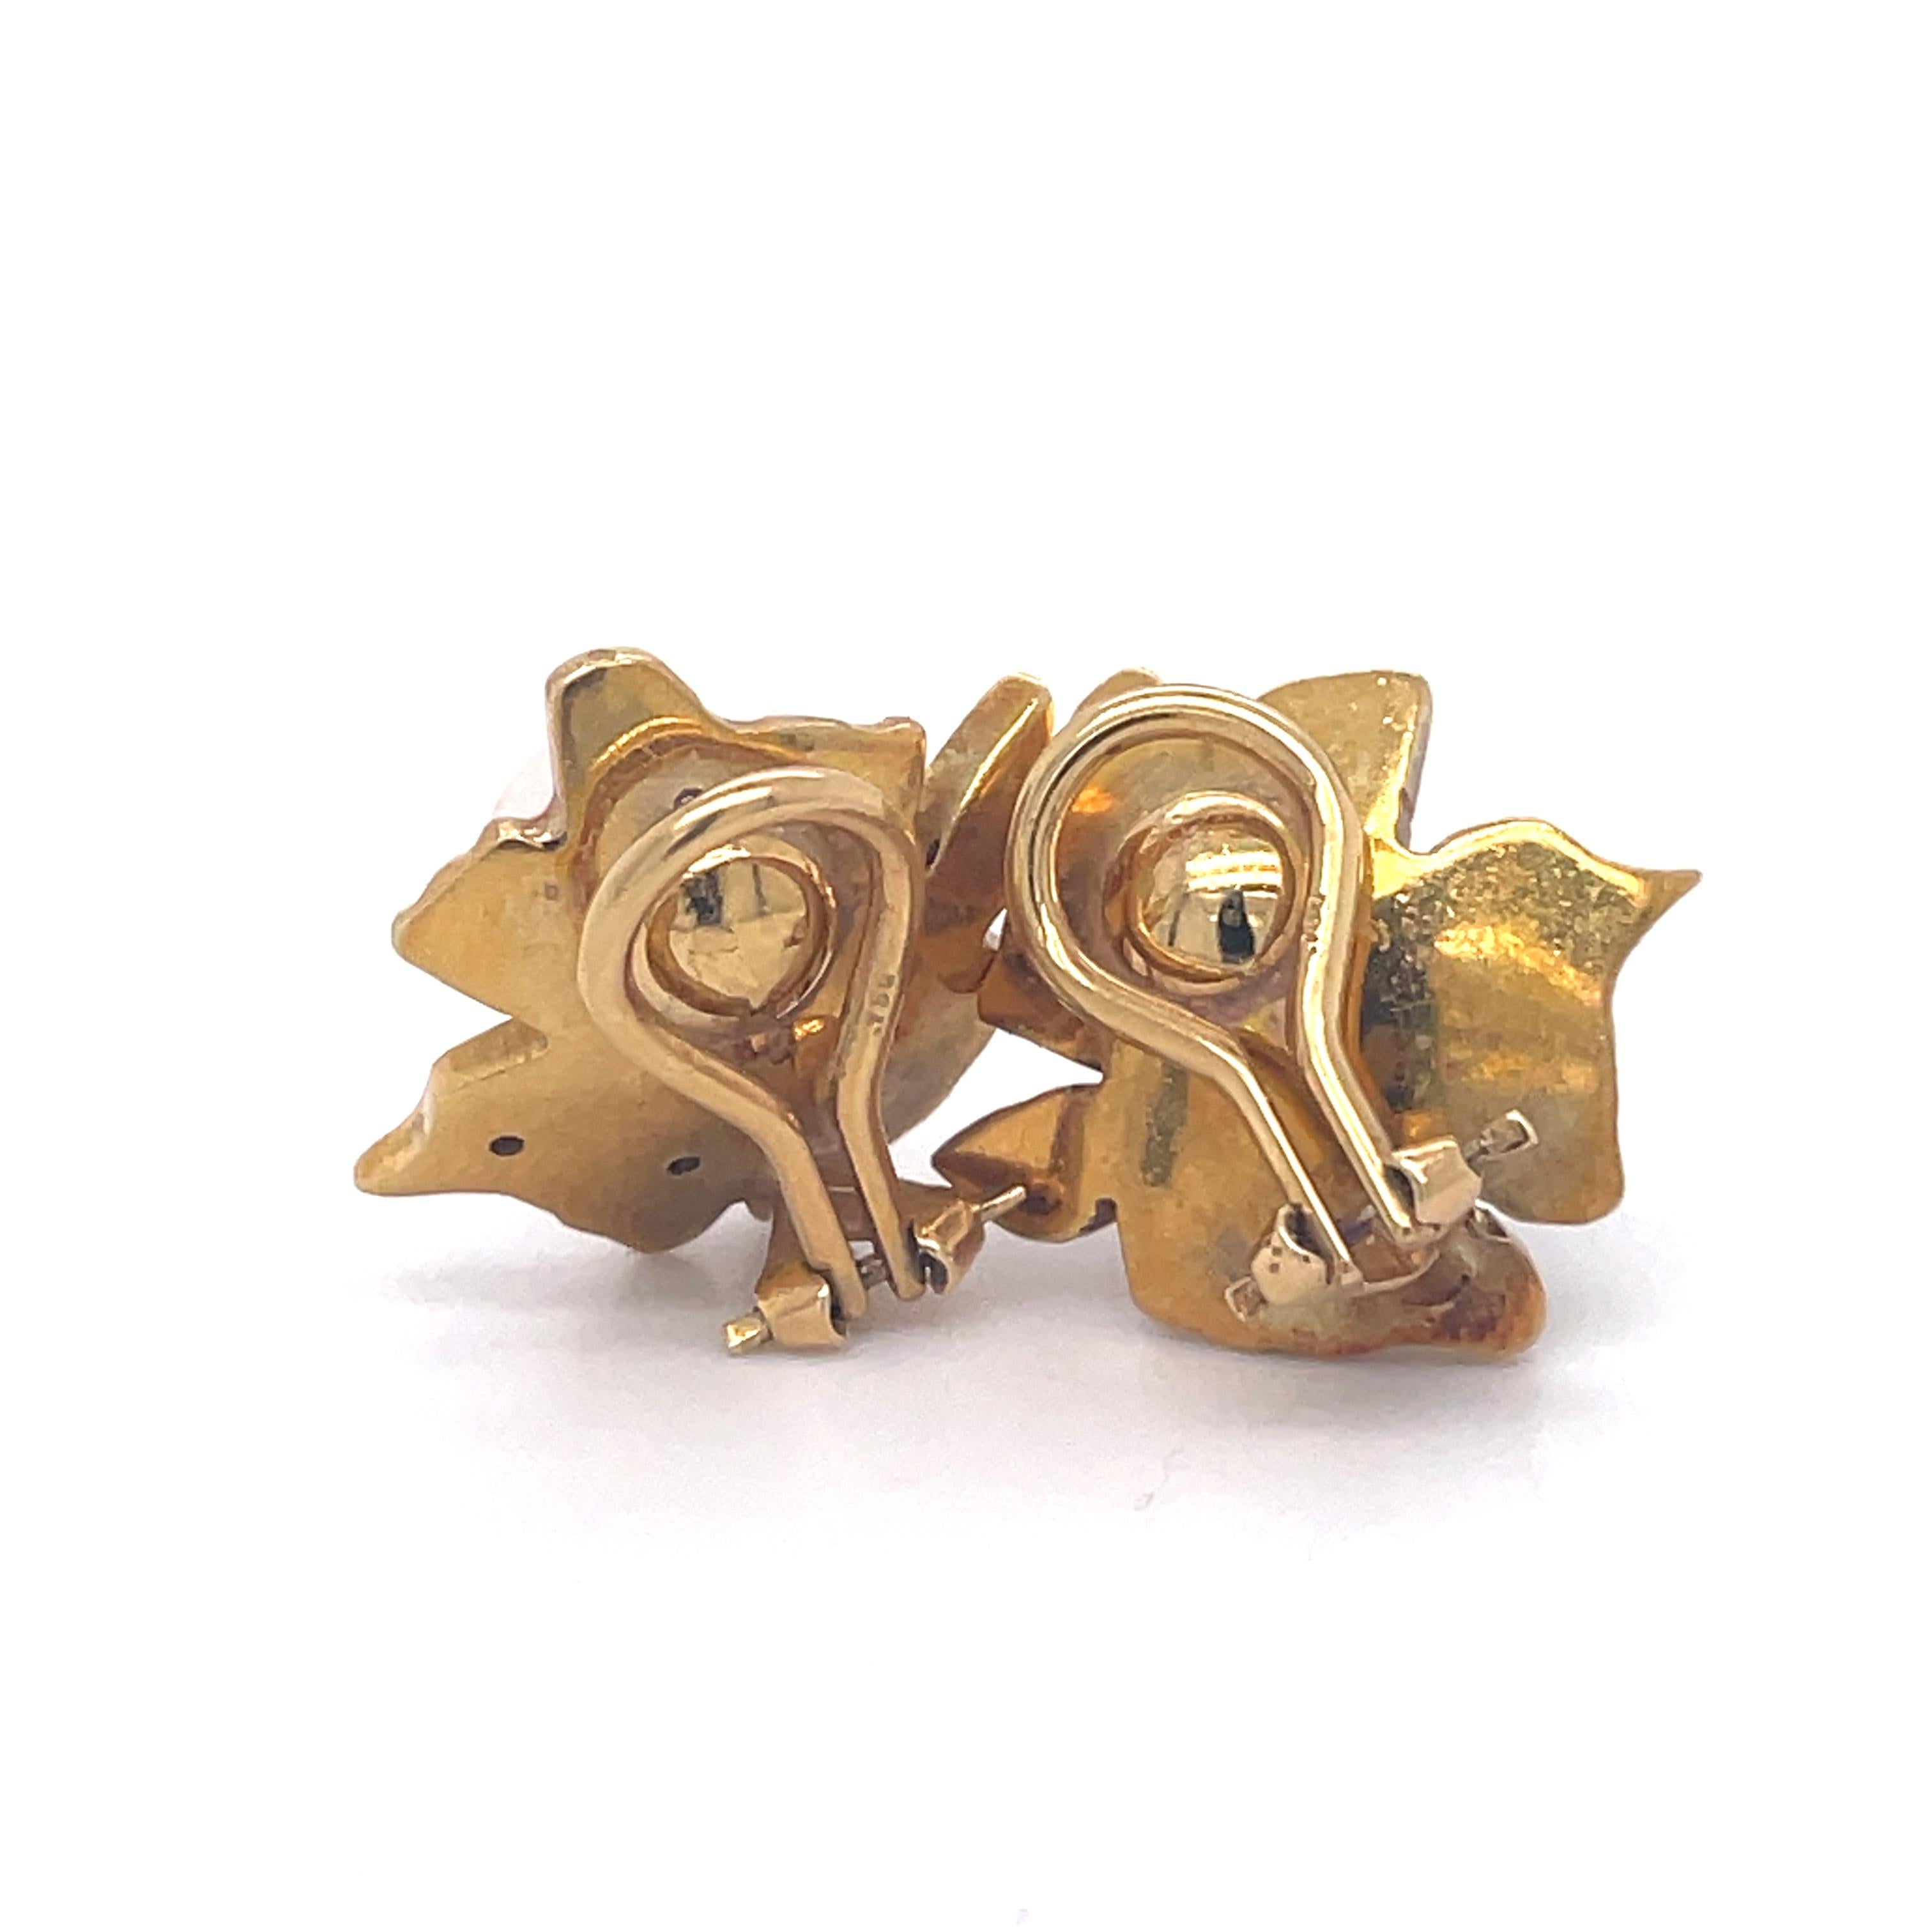 Vintage Pearl Clip-on Earrings - Pearls and 1CT Diamonds Earrings, Solid 18k Yellow Gold, Vintage Earrings, Estate Jewelry, Earings for Women, Estate Earrings
~~ S e t t i n g ~~
Solid 18k Yellow Gold
11.5 grams
size: 18.38 x 19.3
 
 
~~ Stones